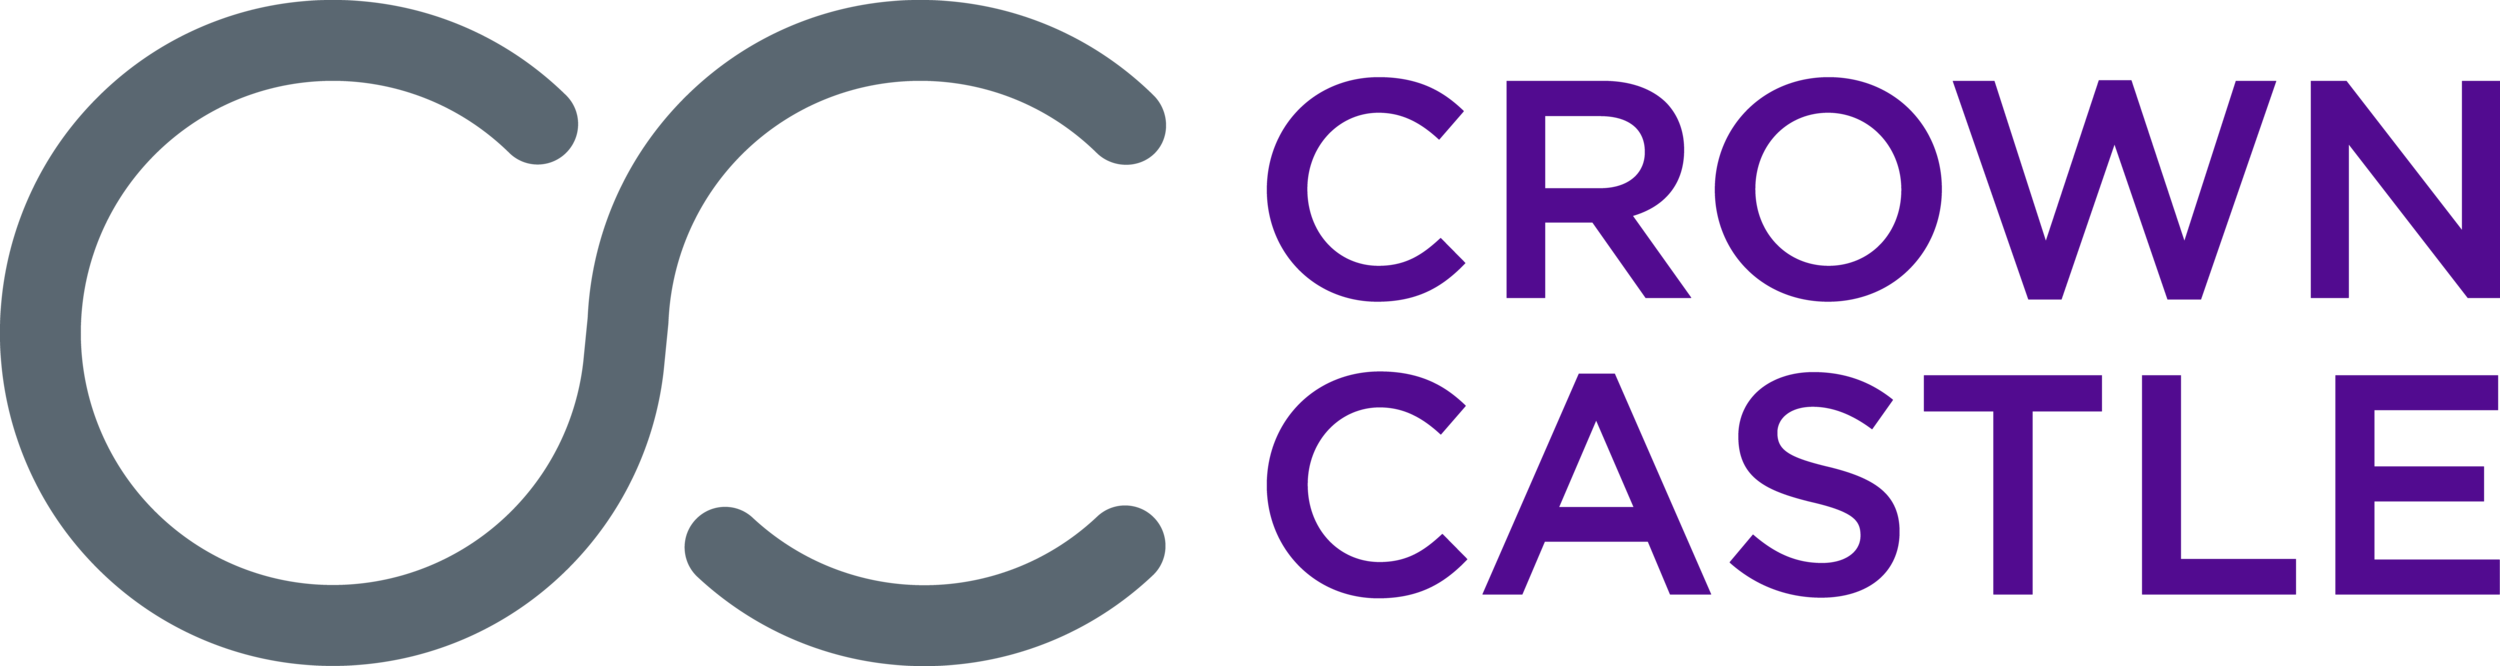 CCMasterbrand_Logo_RGB (002).png